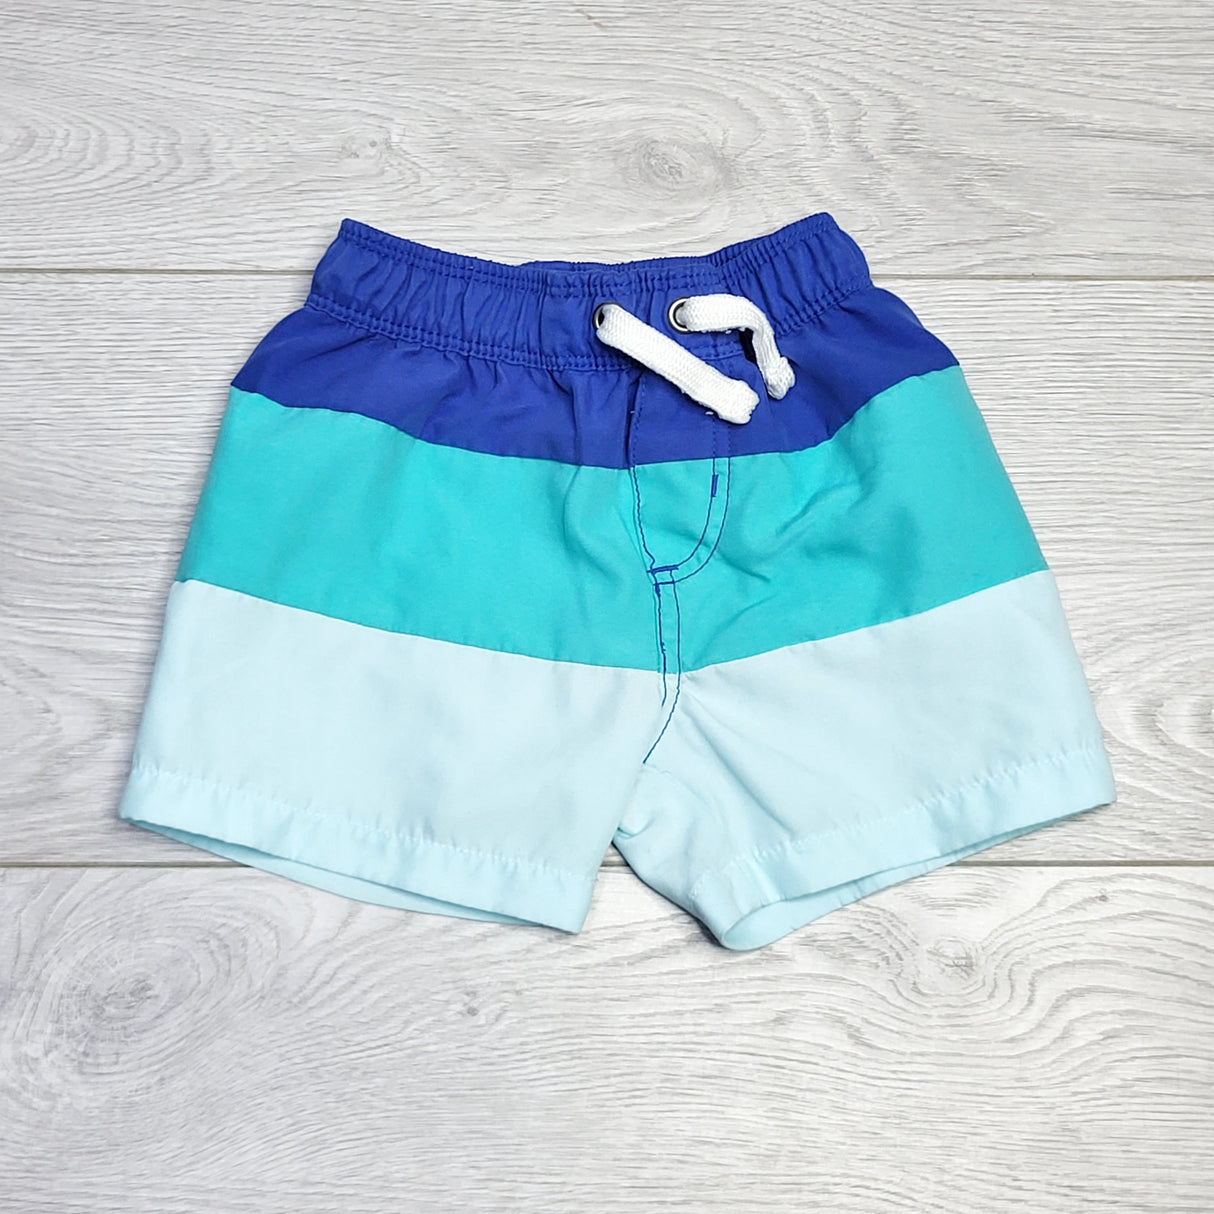 RZA2 - Carters striped swim shorts. Size 9 months